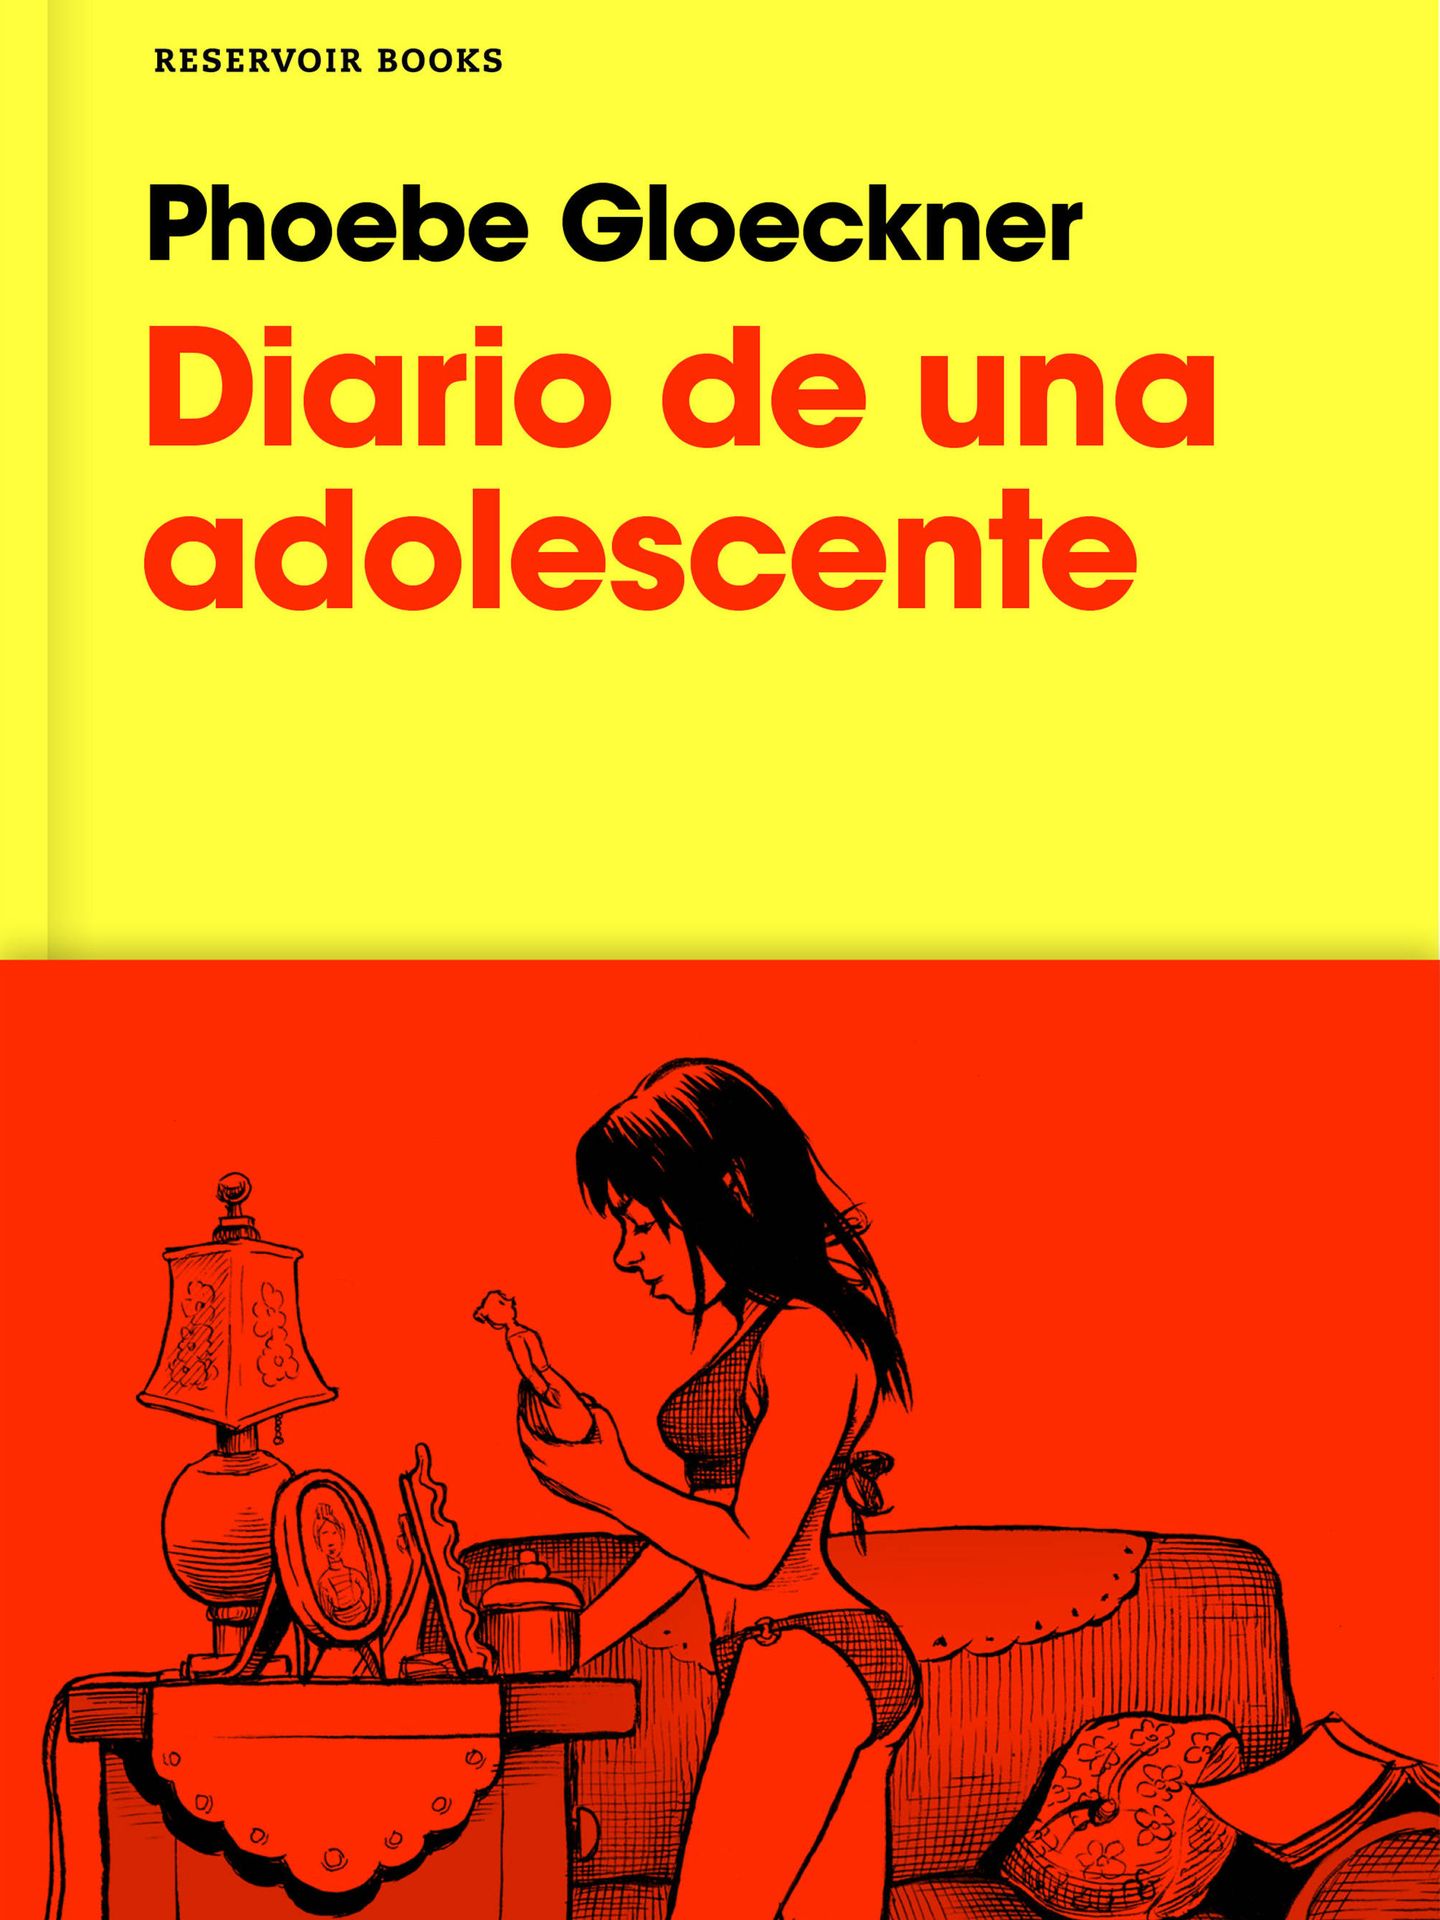 'Diario de una adolescente'. (Reservoir Books)